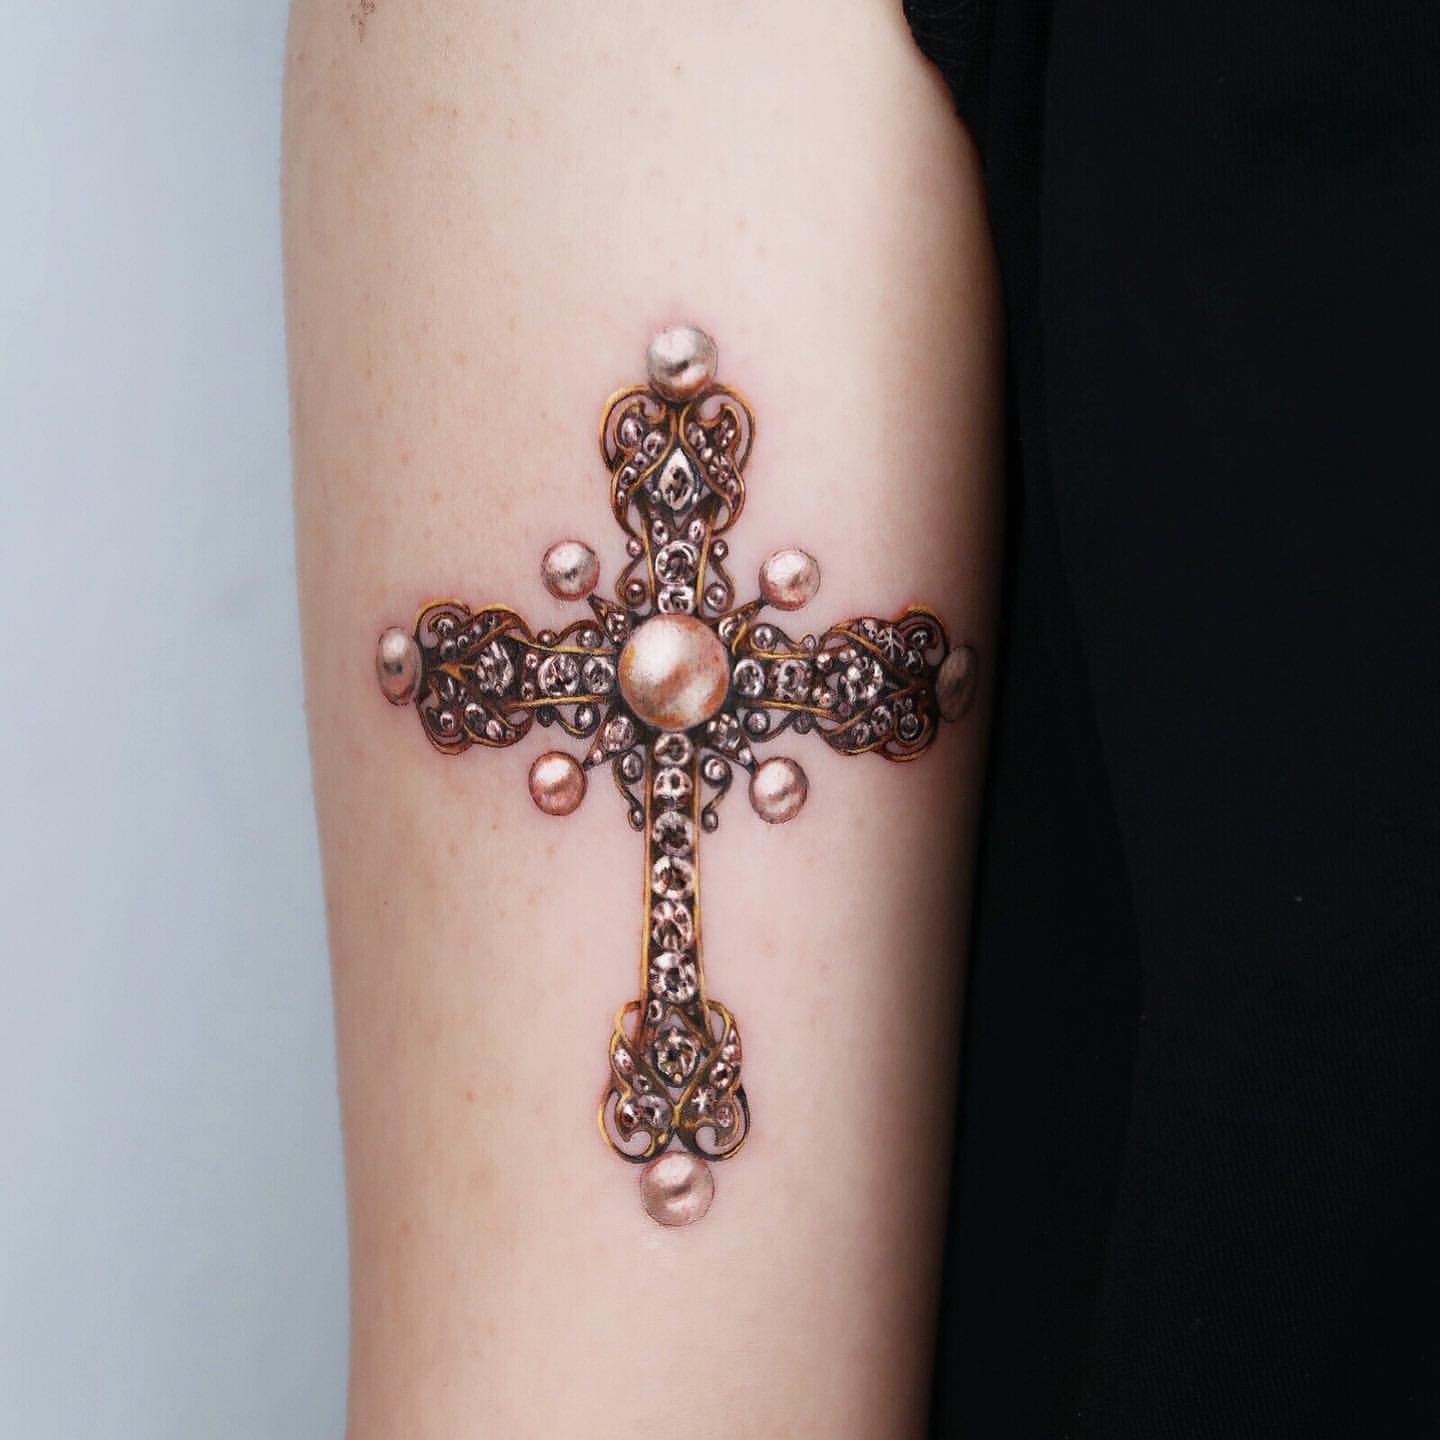 Christian Tattoos for Women 50